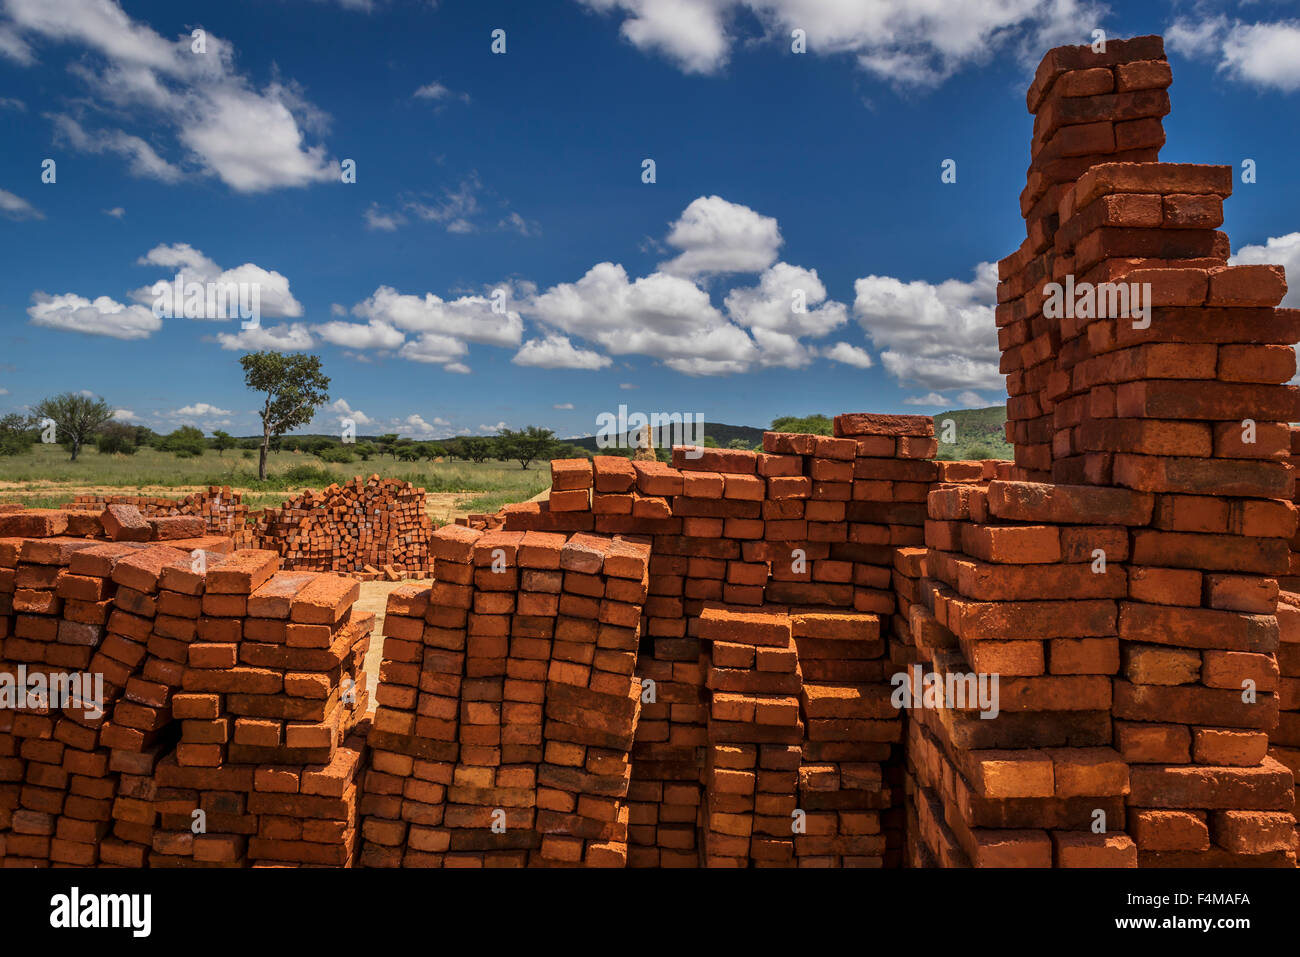 Bricks stacked for building, Okonjima, Namibia, Africa Stock Photo